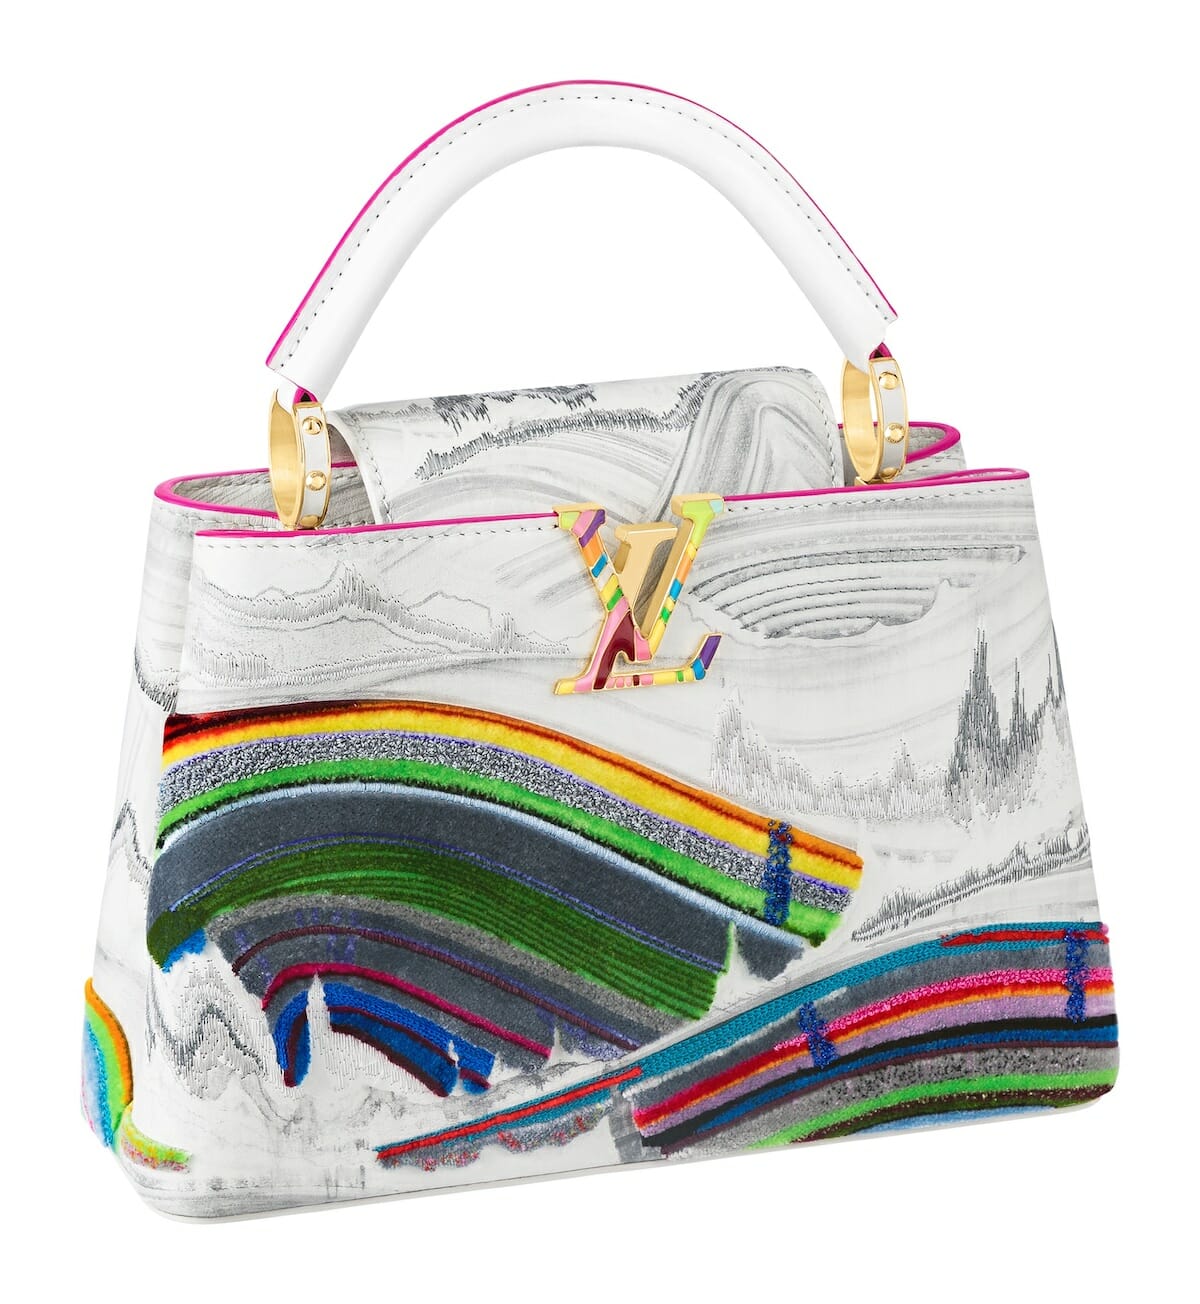 Louis Vuitton has designer handbags at Artycapucines